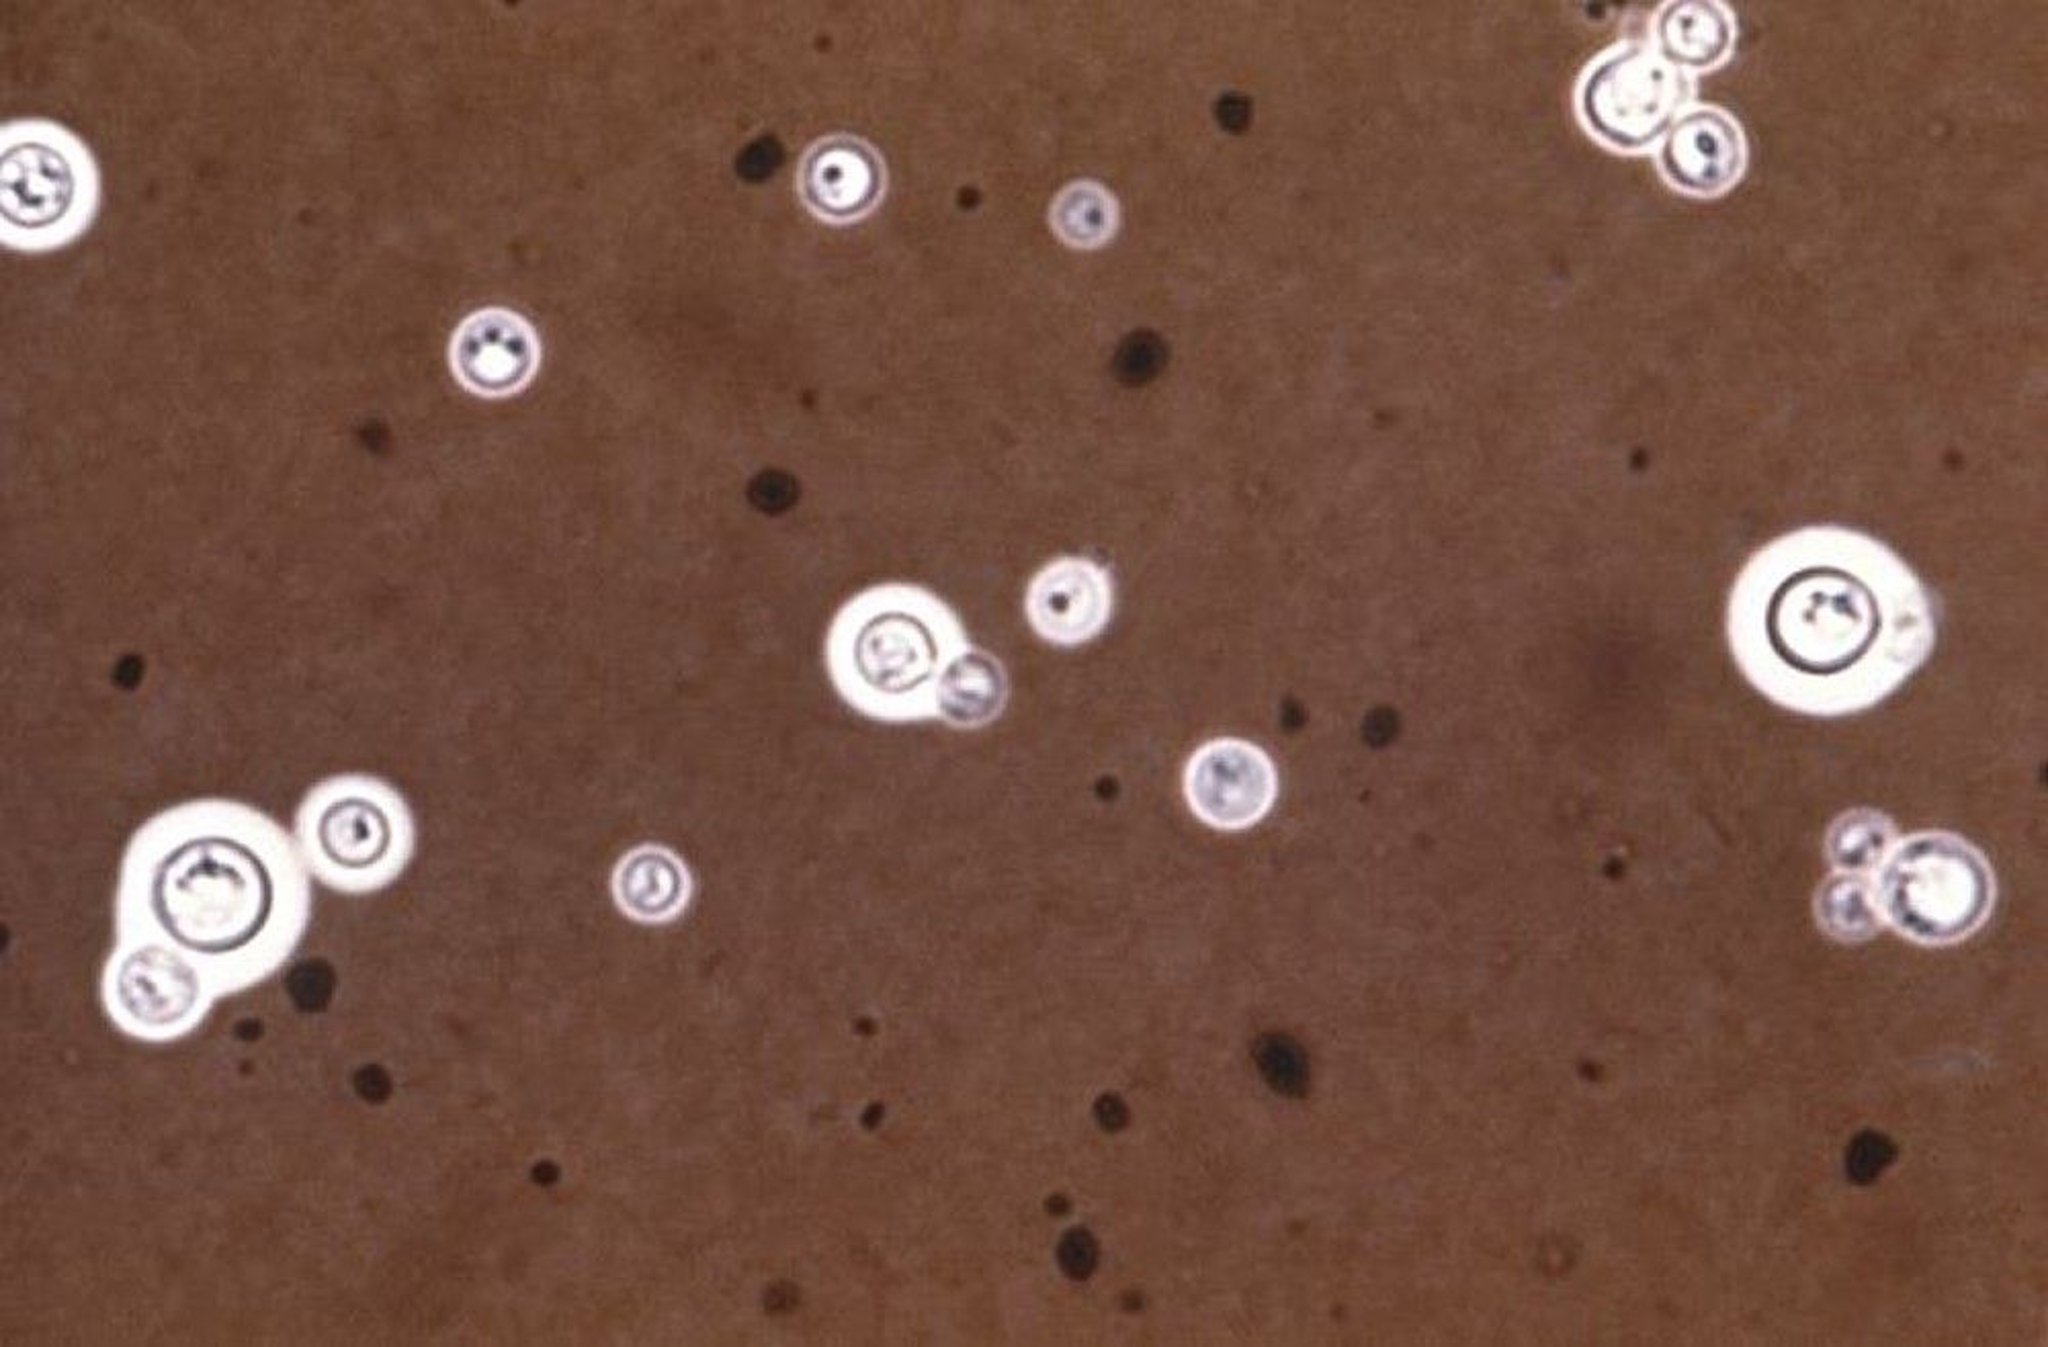 India Ink Stain (<i >Cryptococcus neoformans</i>)